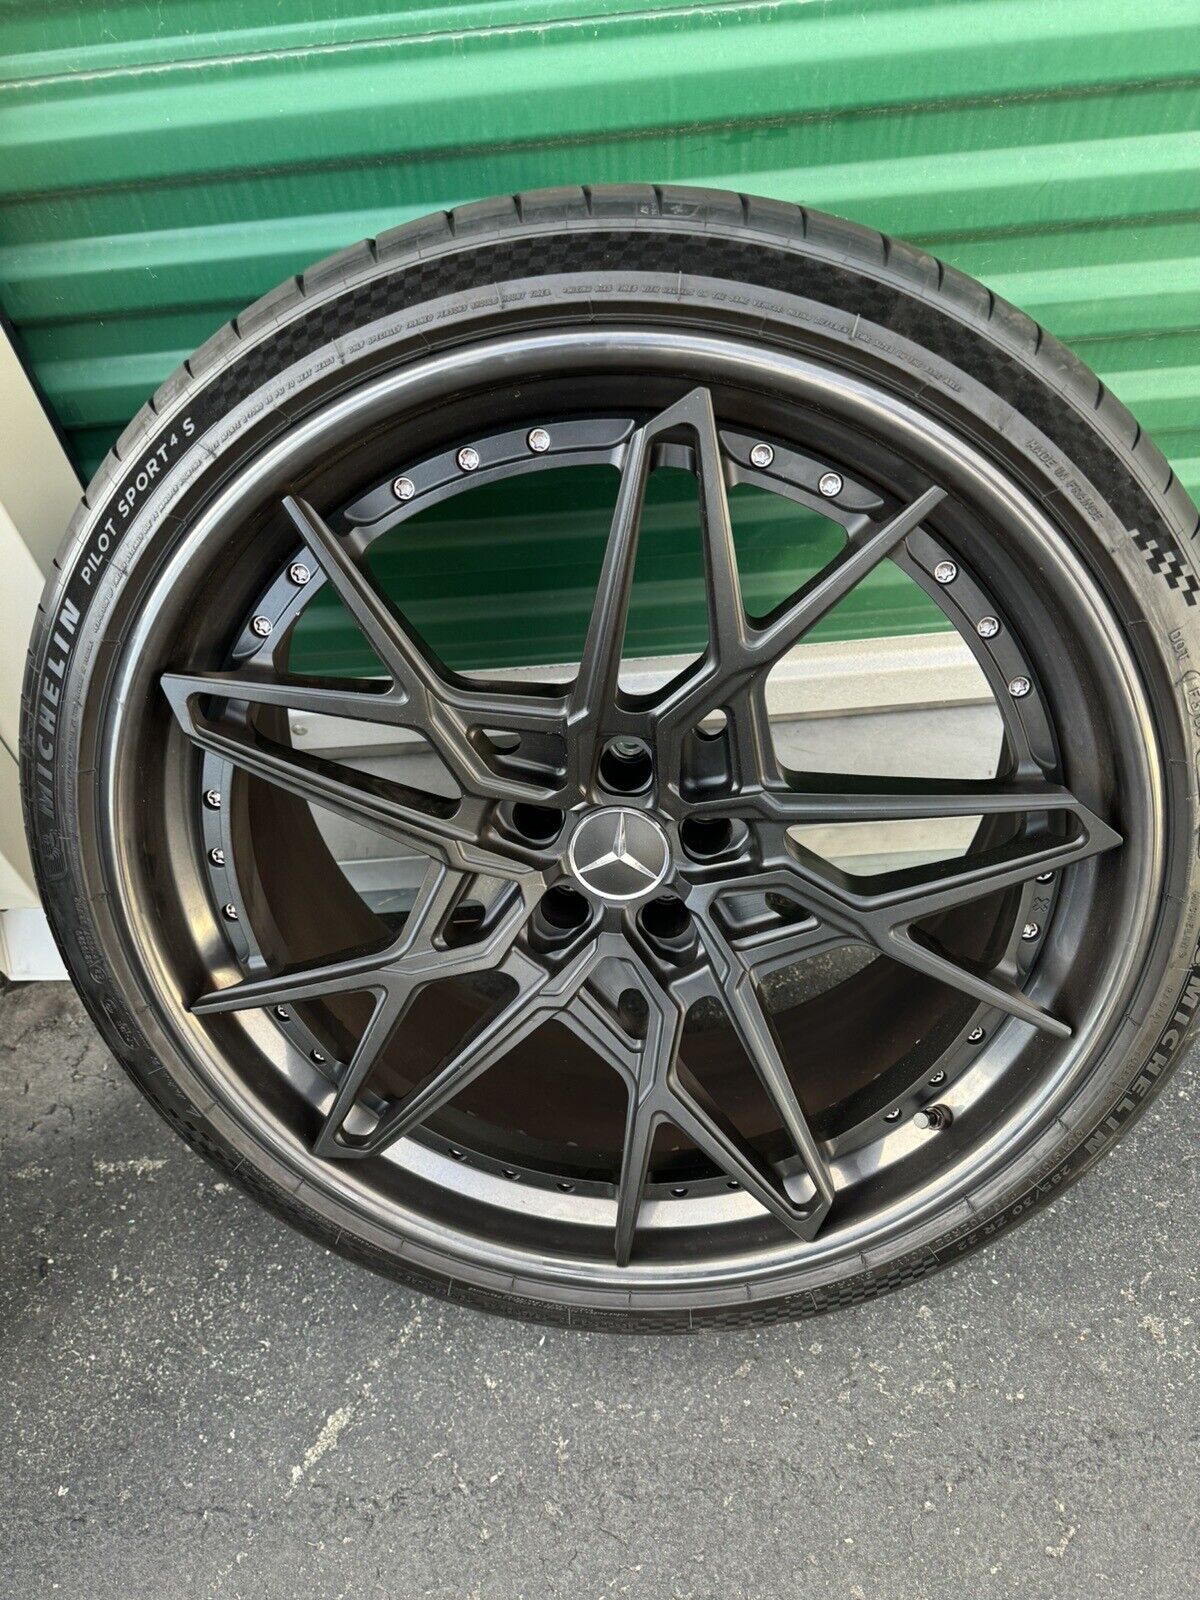 ANRKY S3-X2 Wheels & Michelin Pilot Sport 4S Tires